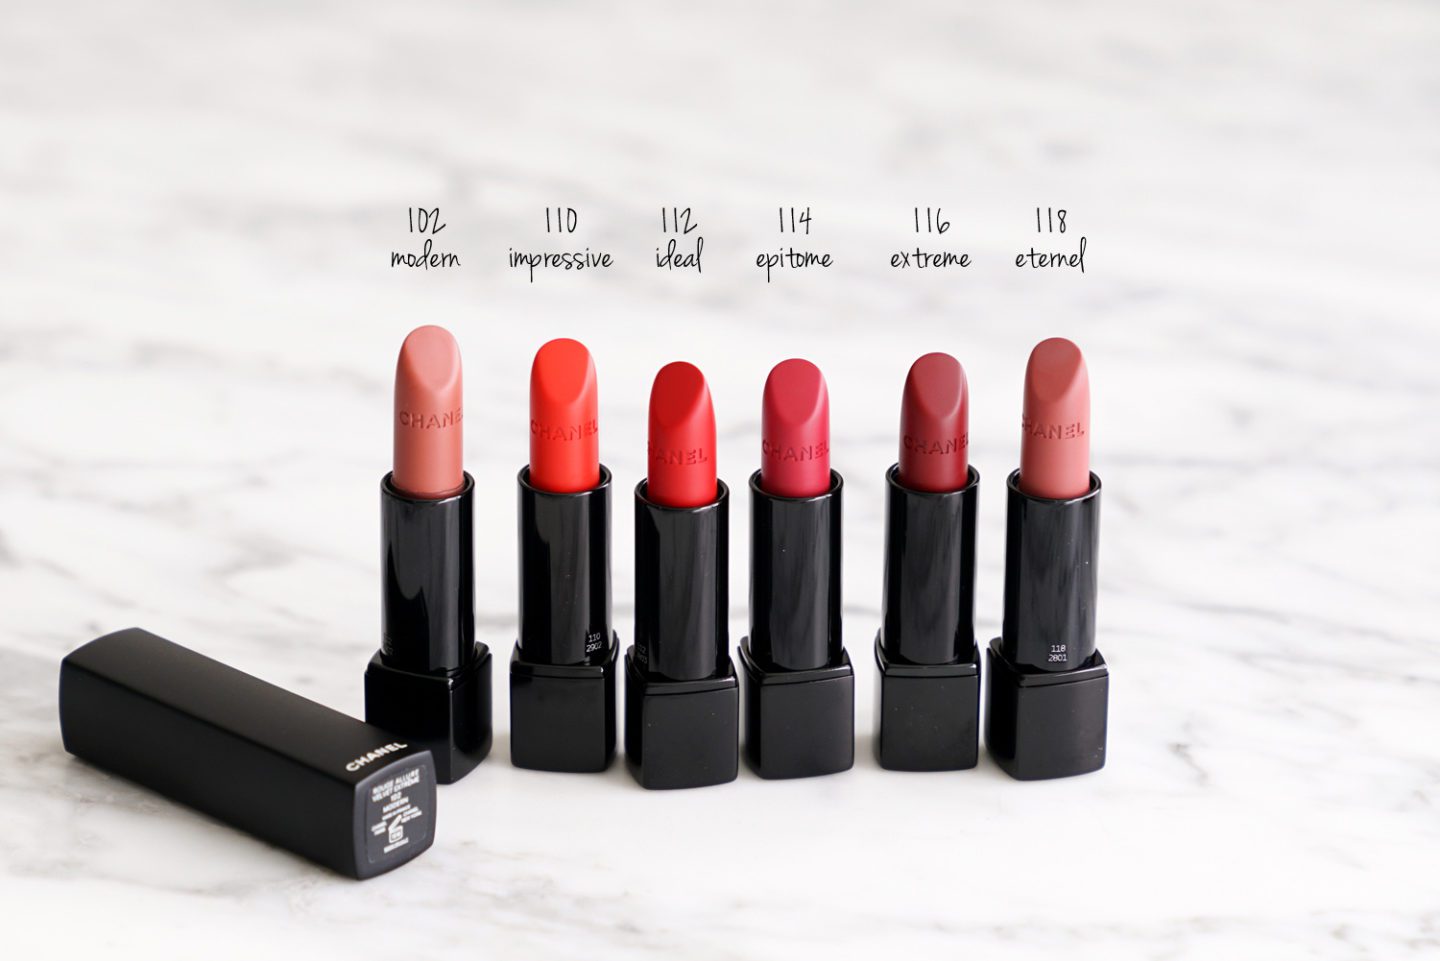 chanel lipstick kit